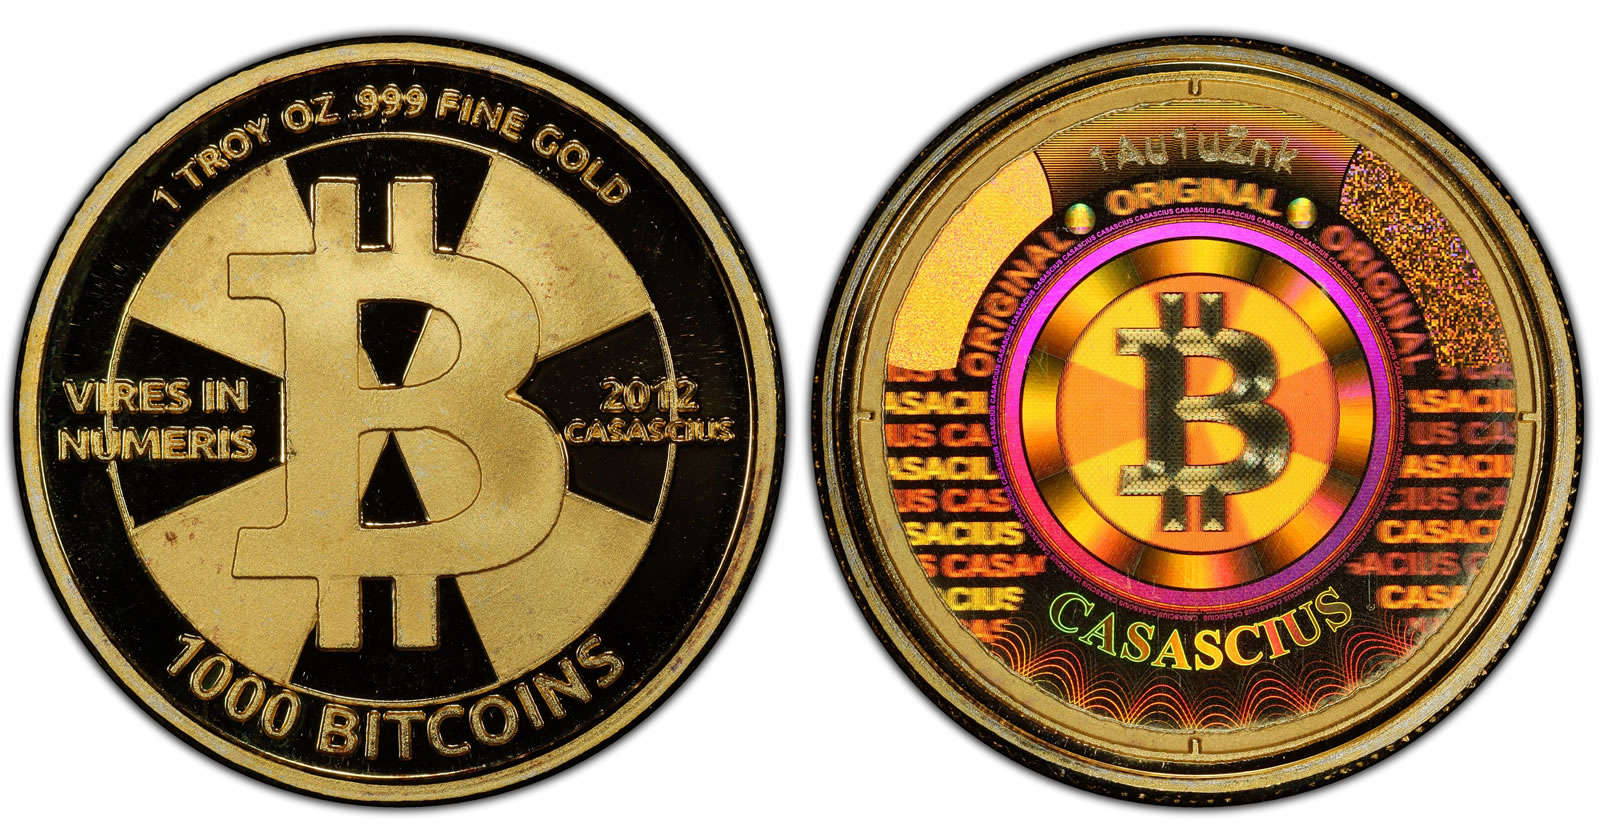 Sina-cism: Bitcoin may be as good as gold